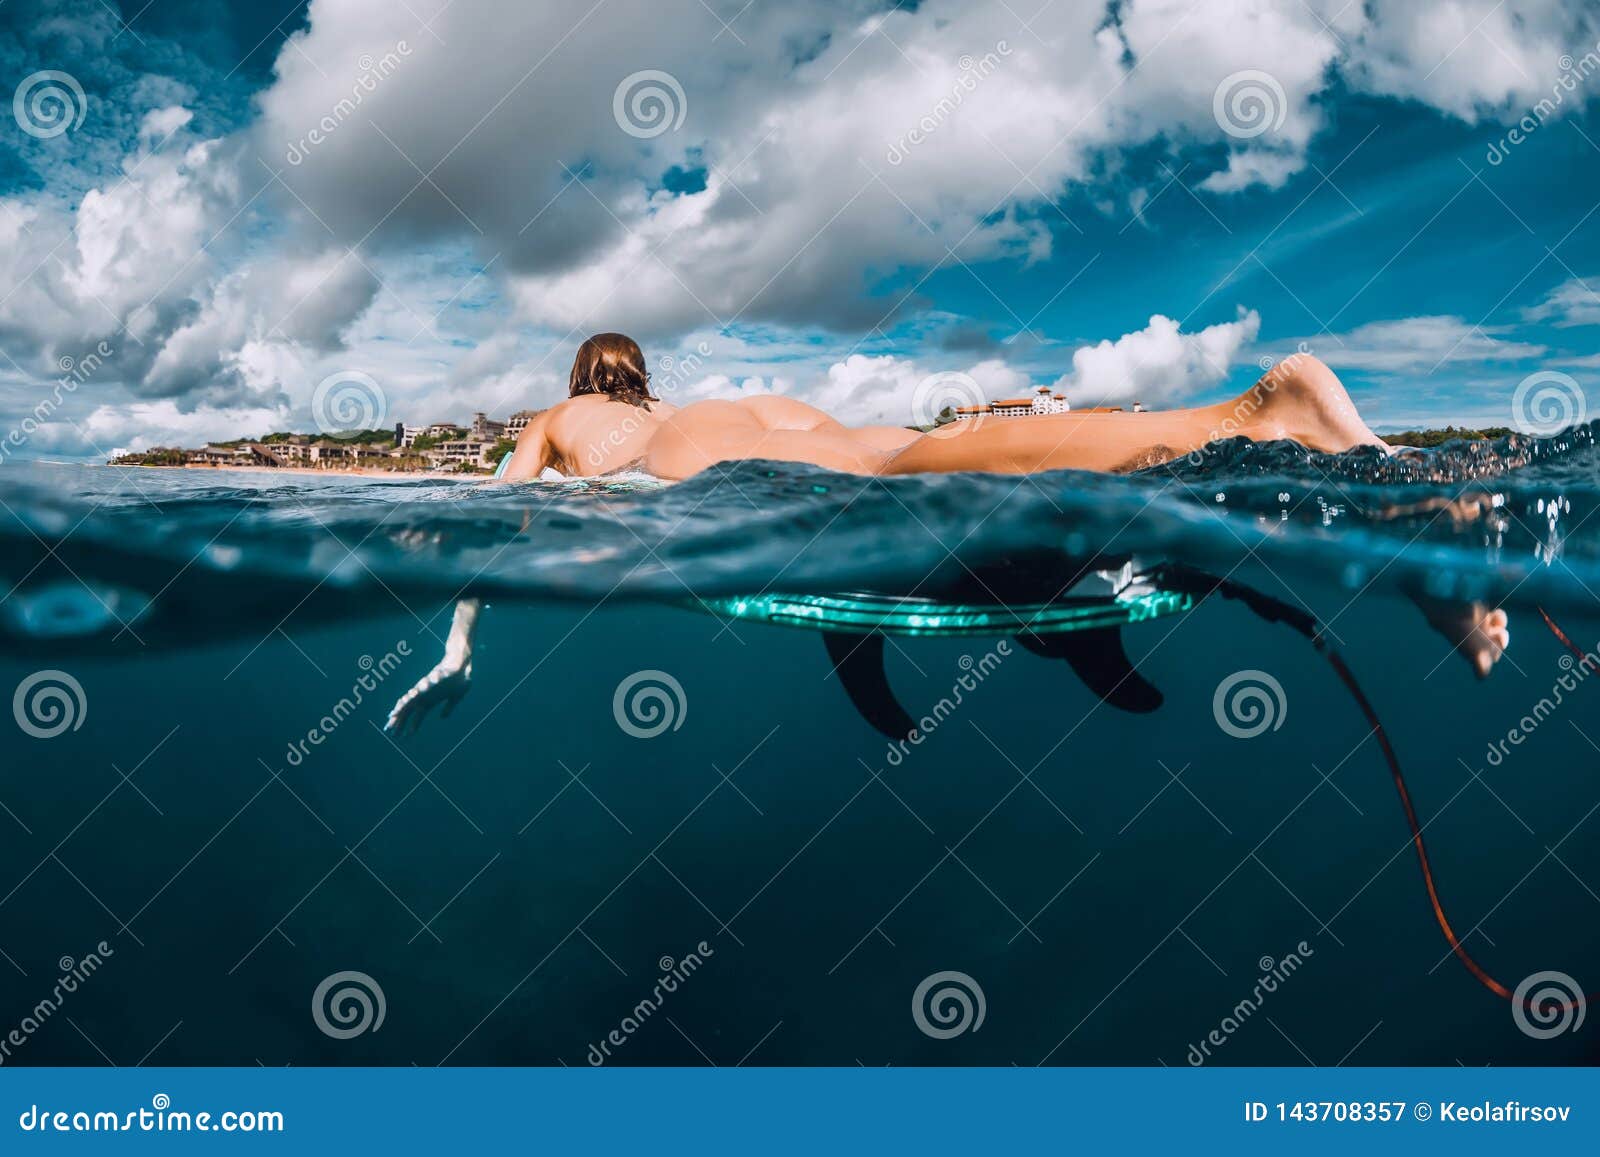 Porn Pictures Beach Surf